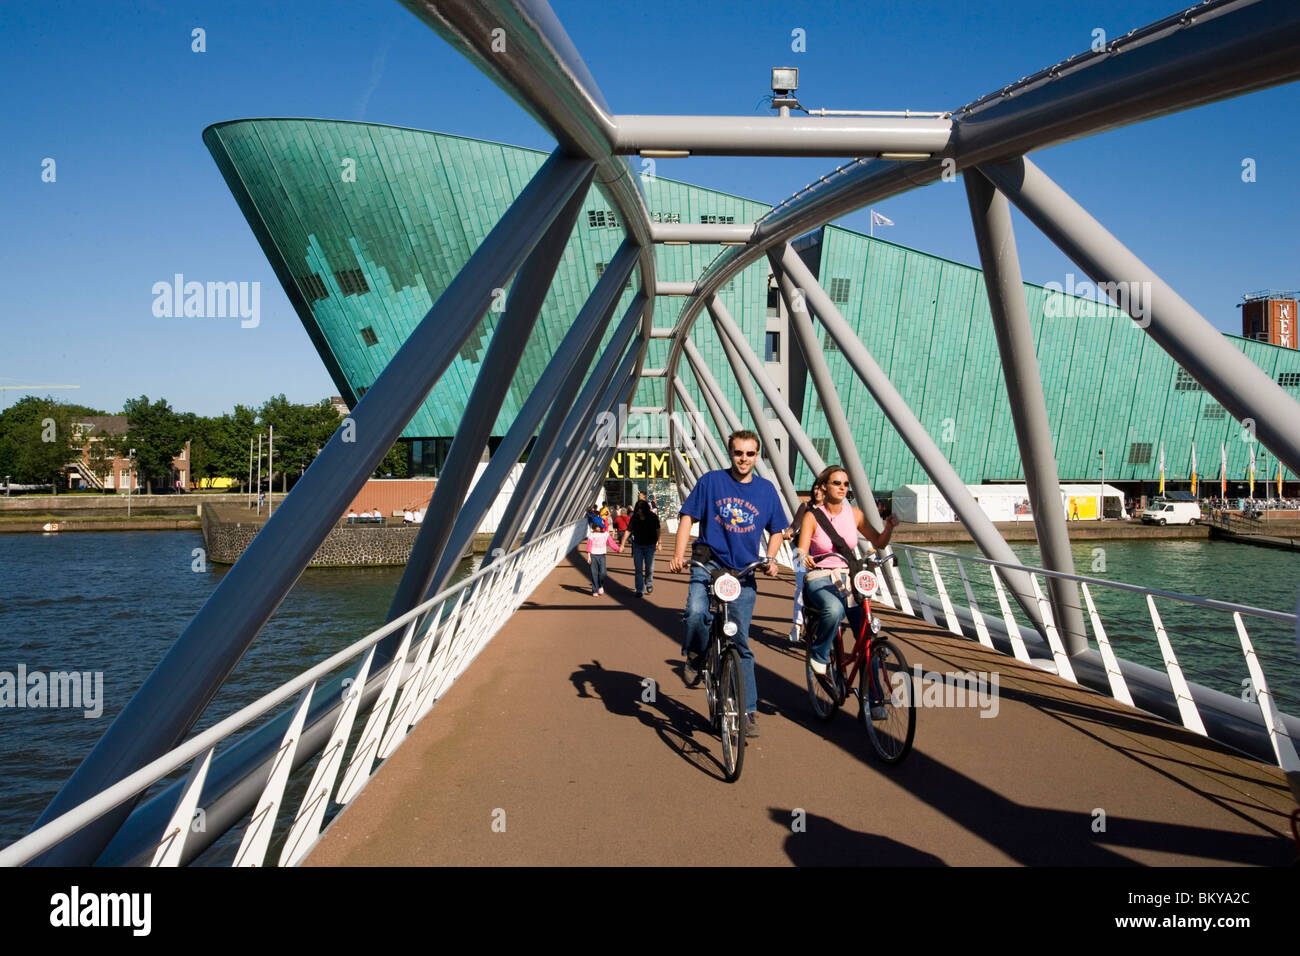 NEMO Museum, Bridge, Cyclists, Cyclists on bridge, leaving NEMO Museum, Amsterdam, Holland, Netherlands Stock Photo